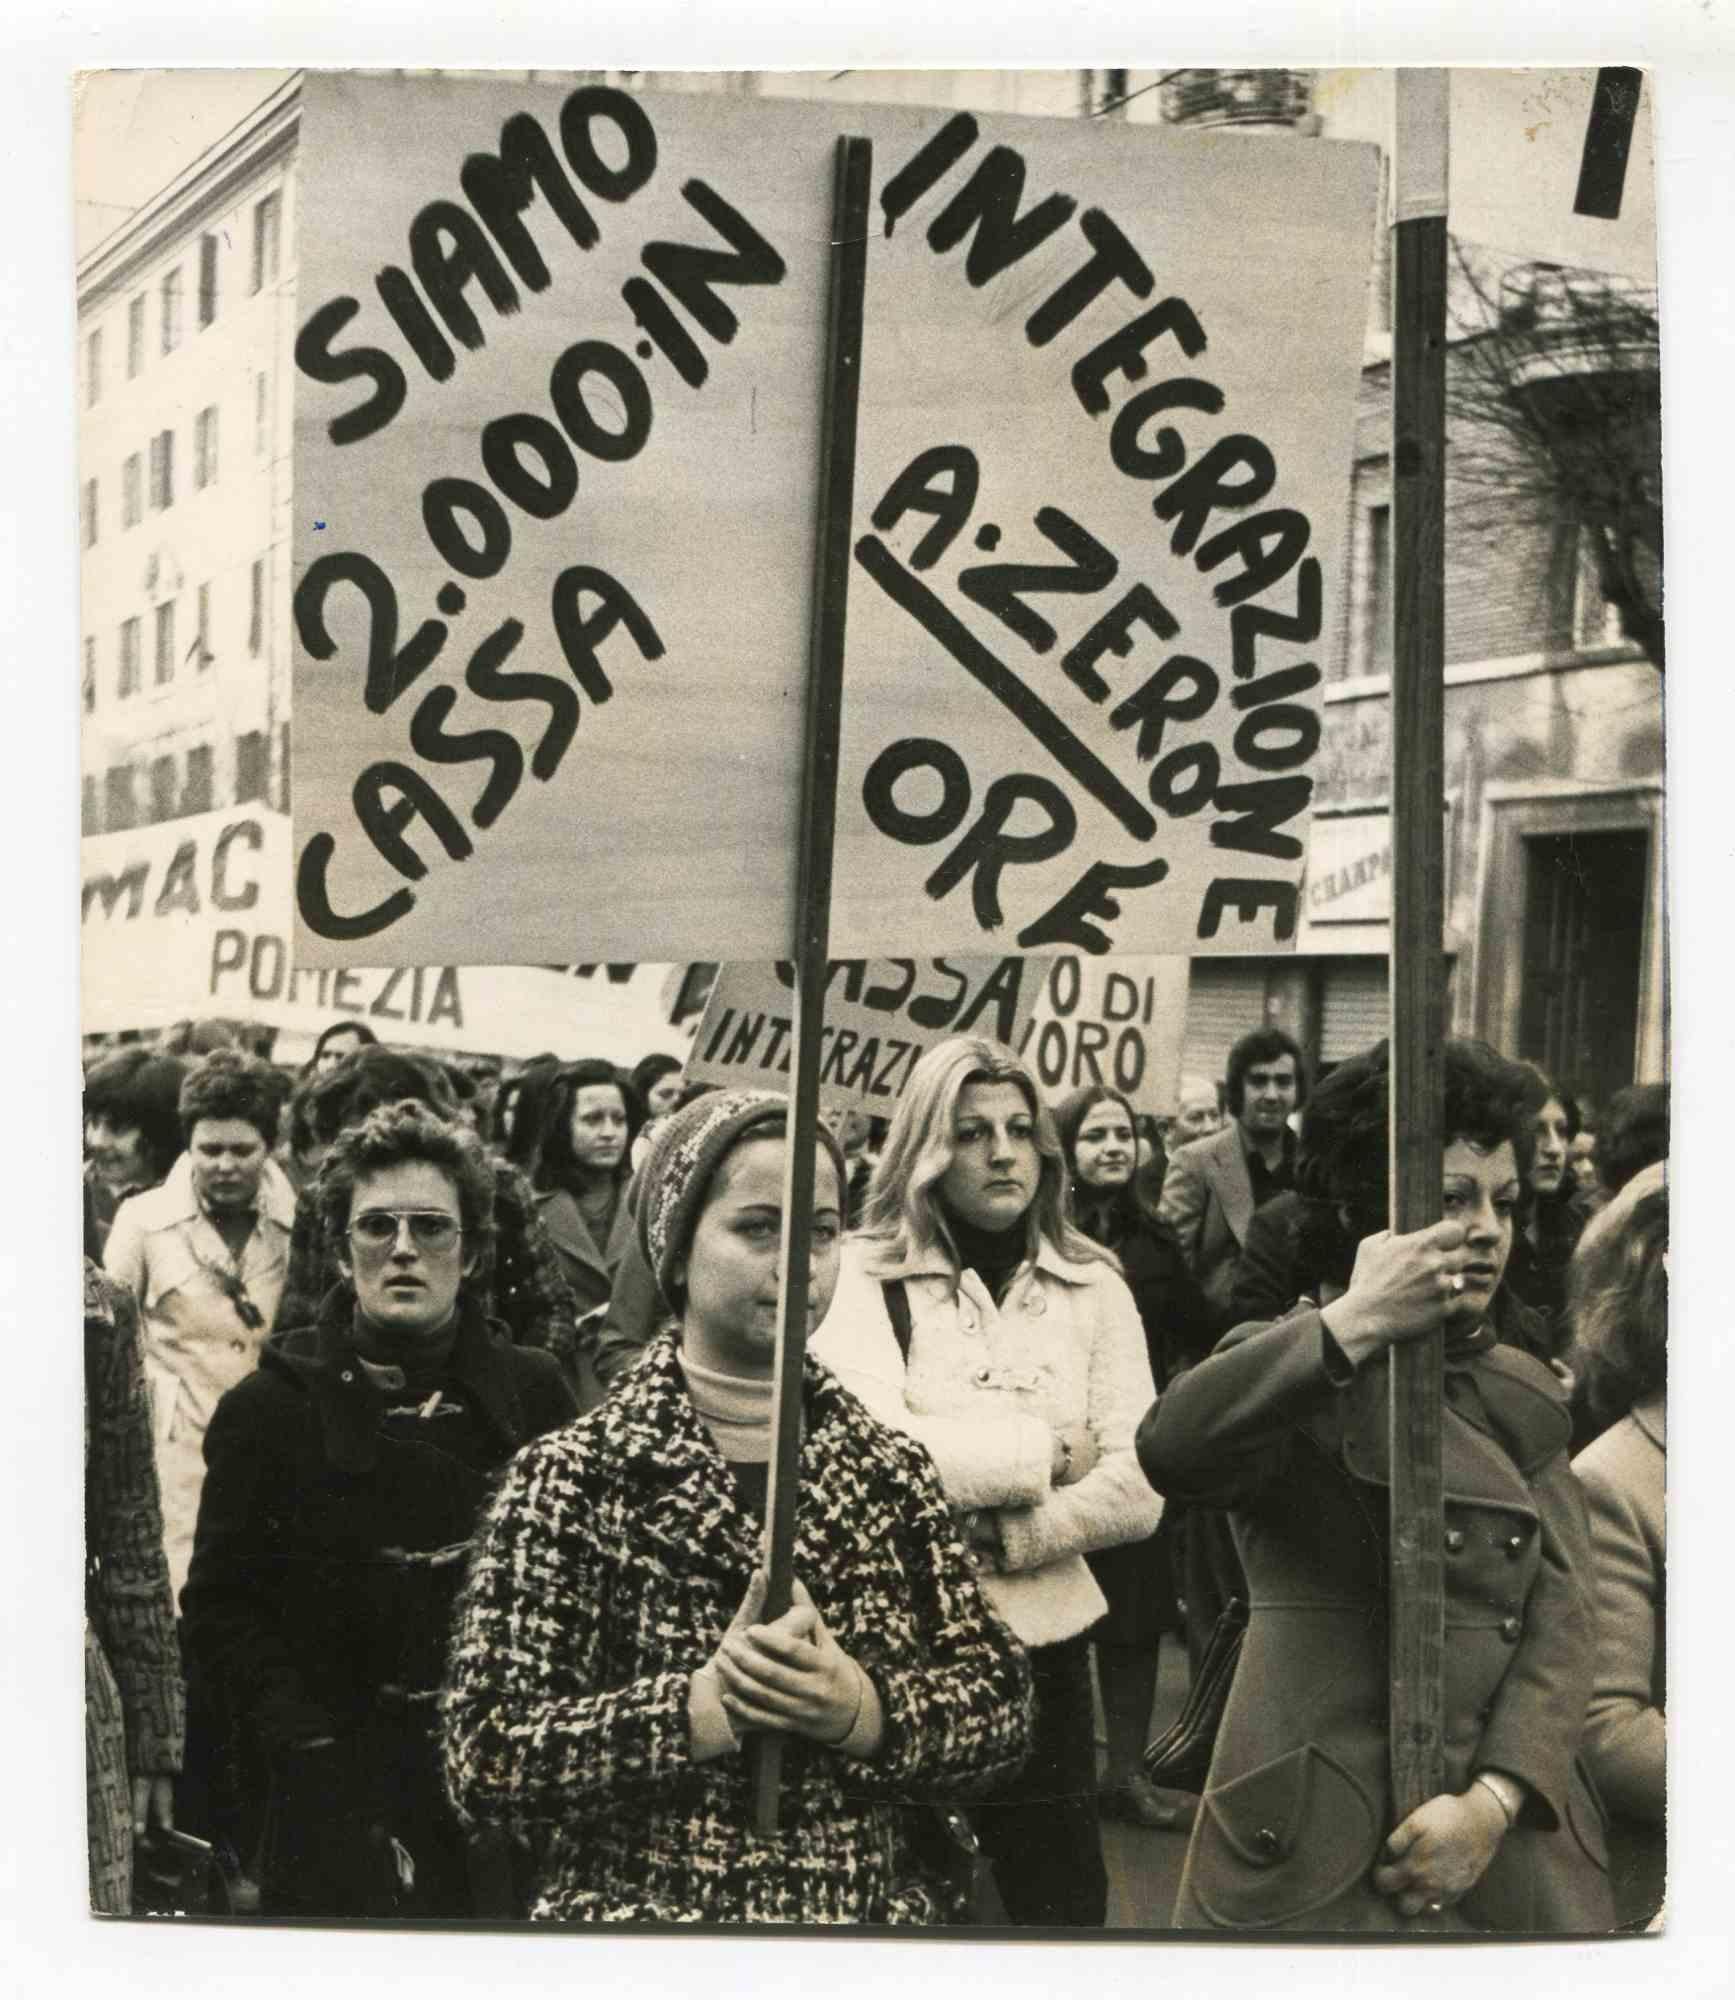 Unknown Portrait Photograph - Women Demonstration of Protest - Vintage Photographs of Feminist Movemen - 1980s